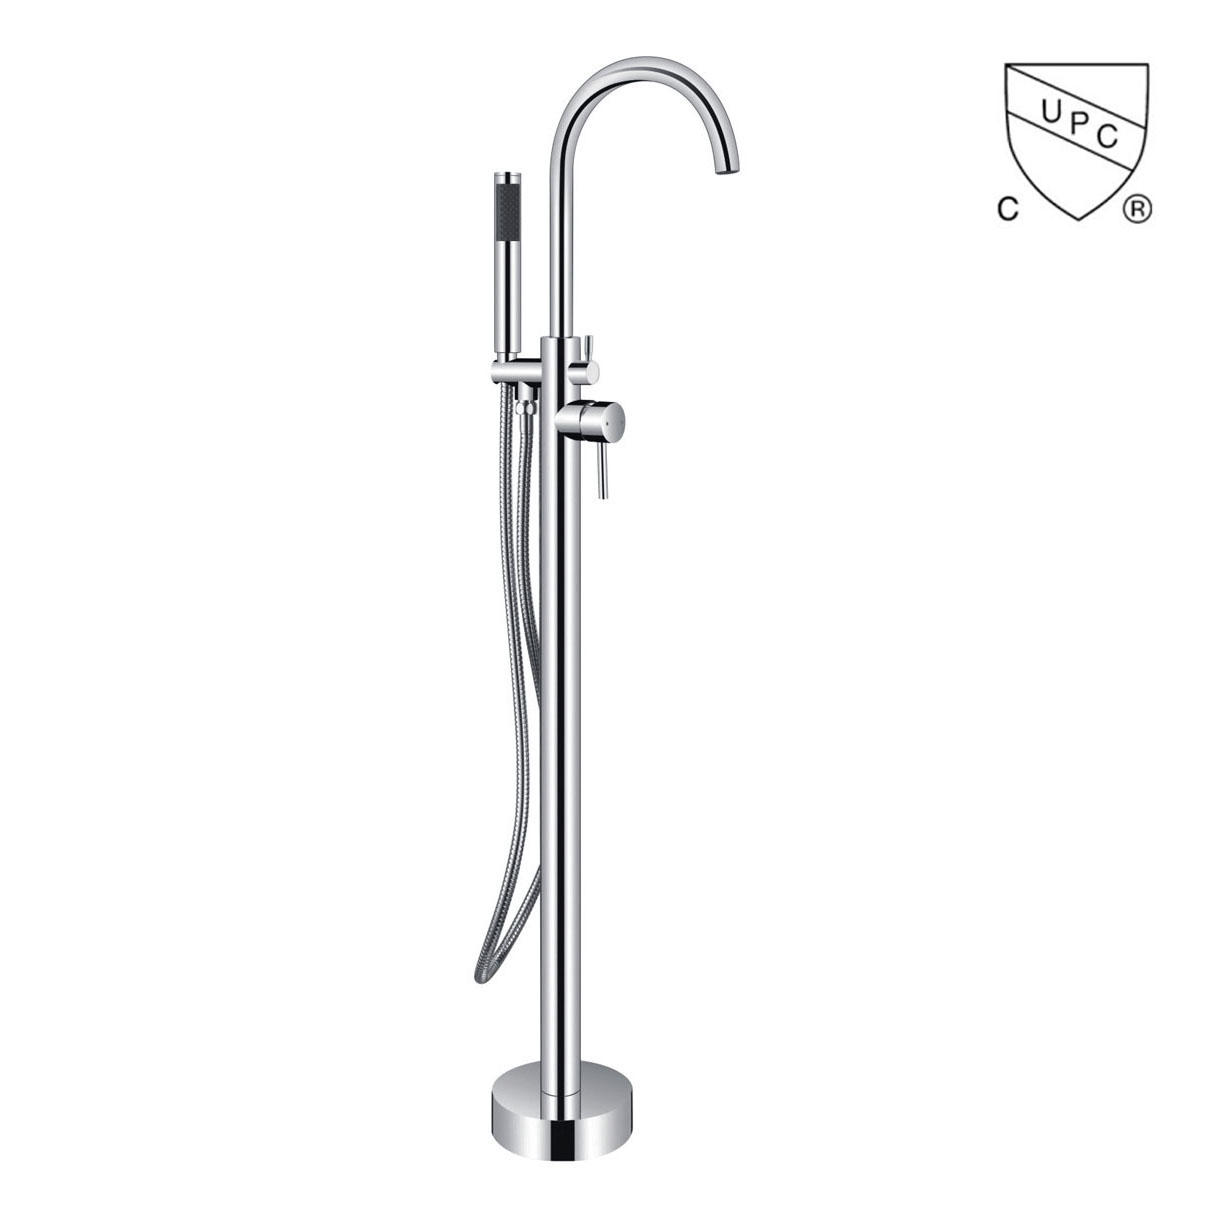 Y0118 UPC, rubinetto per vasca freestanding certificato CUPC, rubinetto per vasca da pavimento;